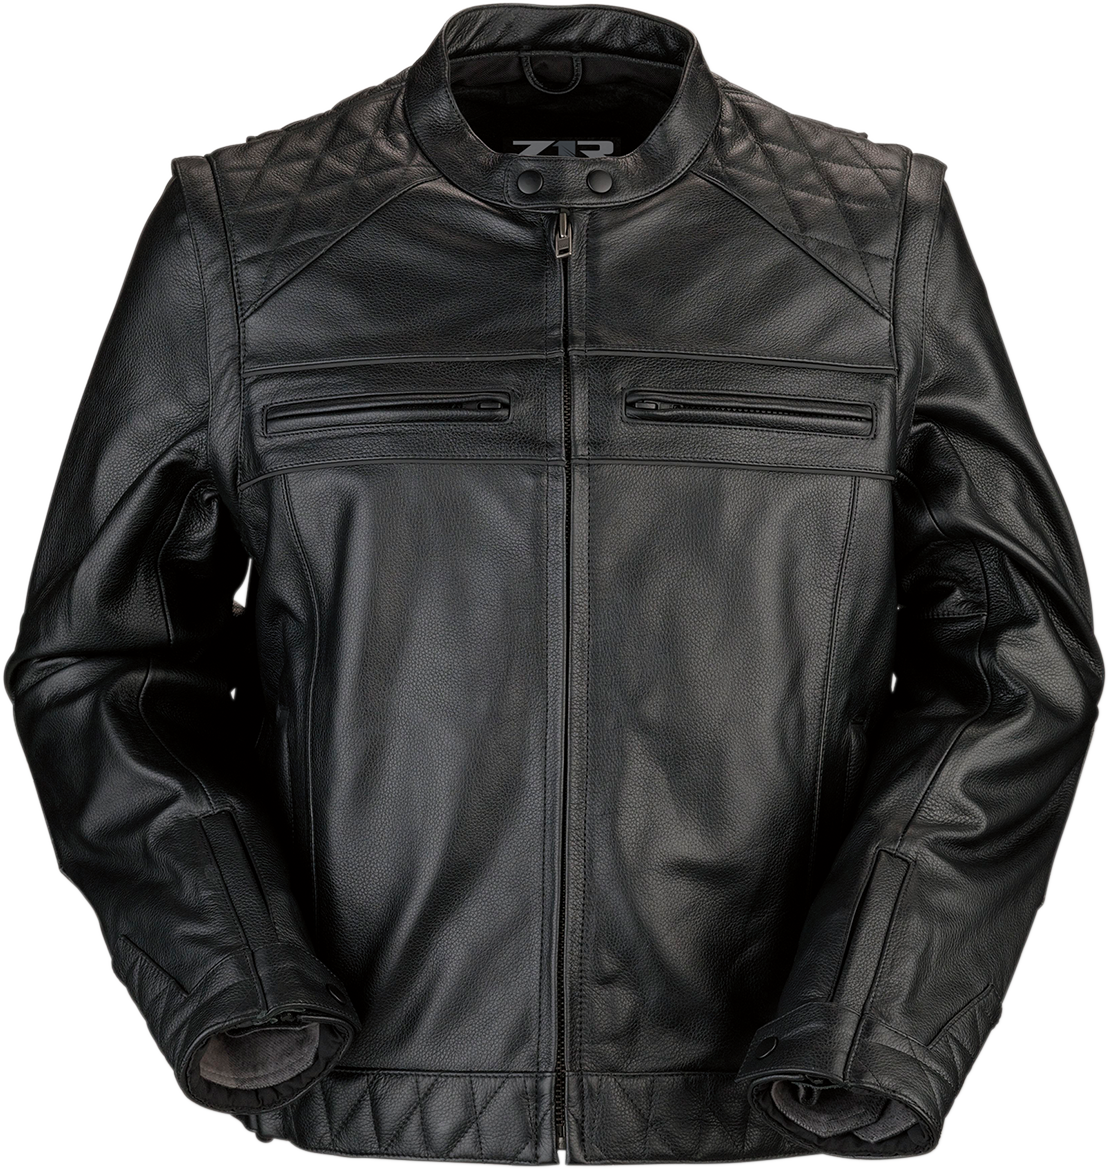 Z1R Ordinance 3 In 1 Jacket - Black - Large 2810-3569